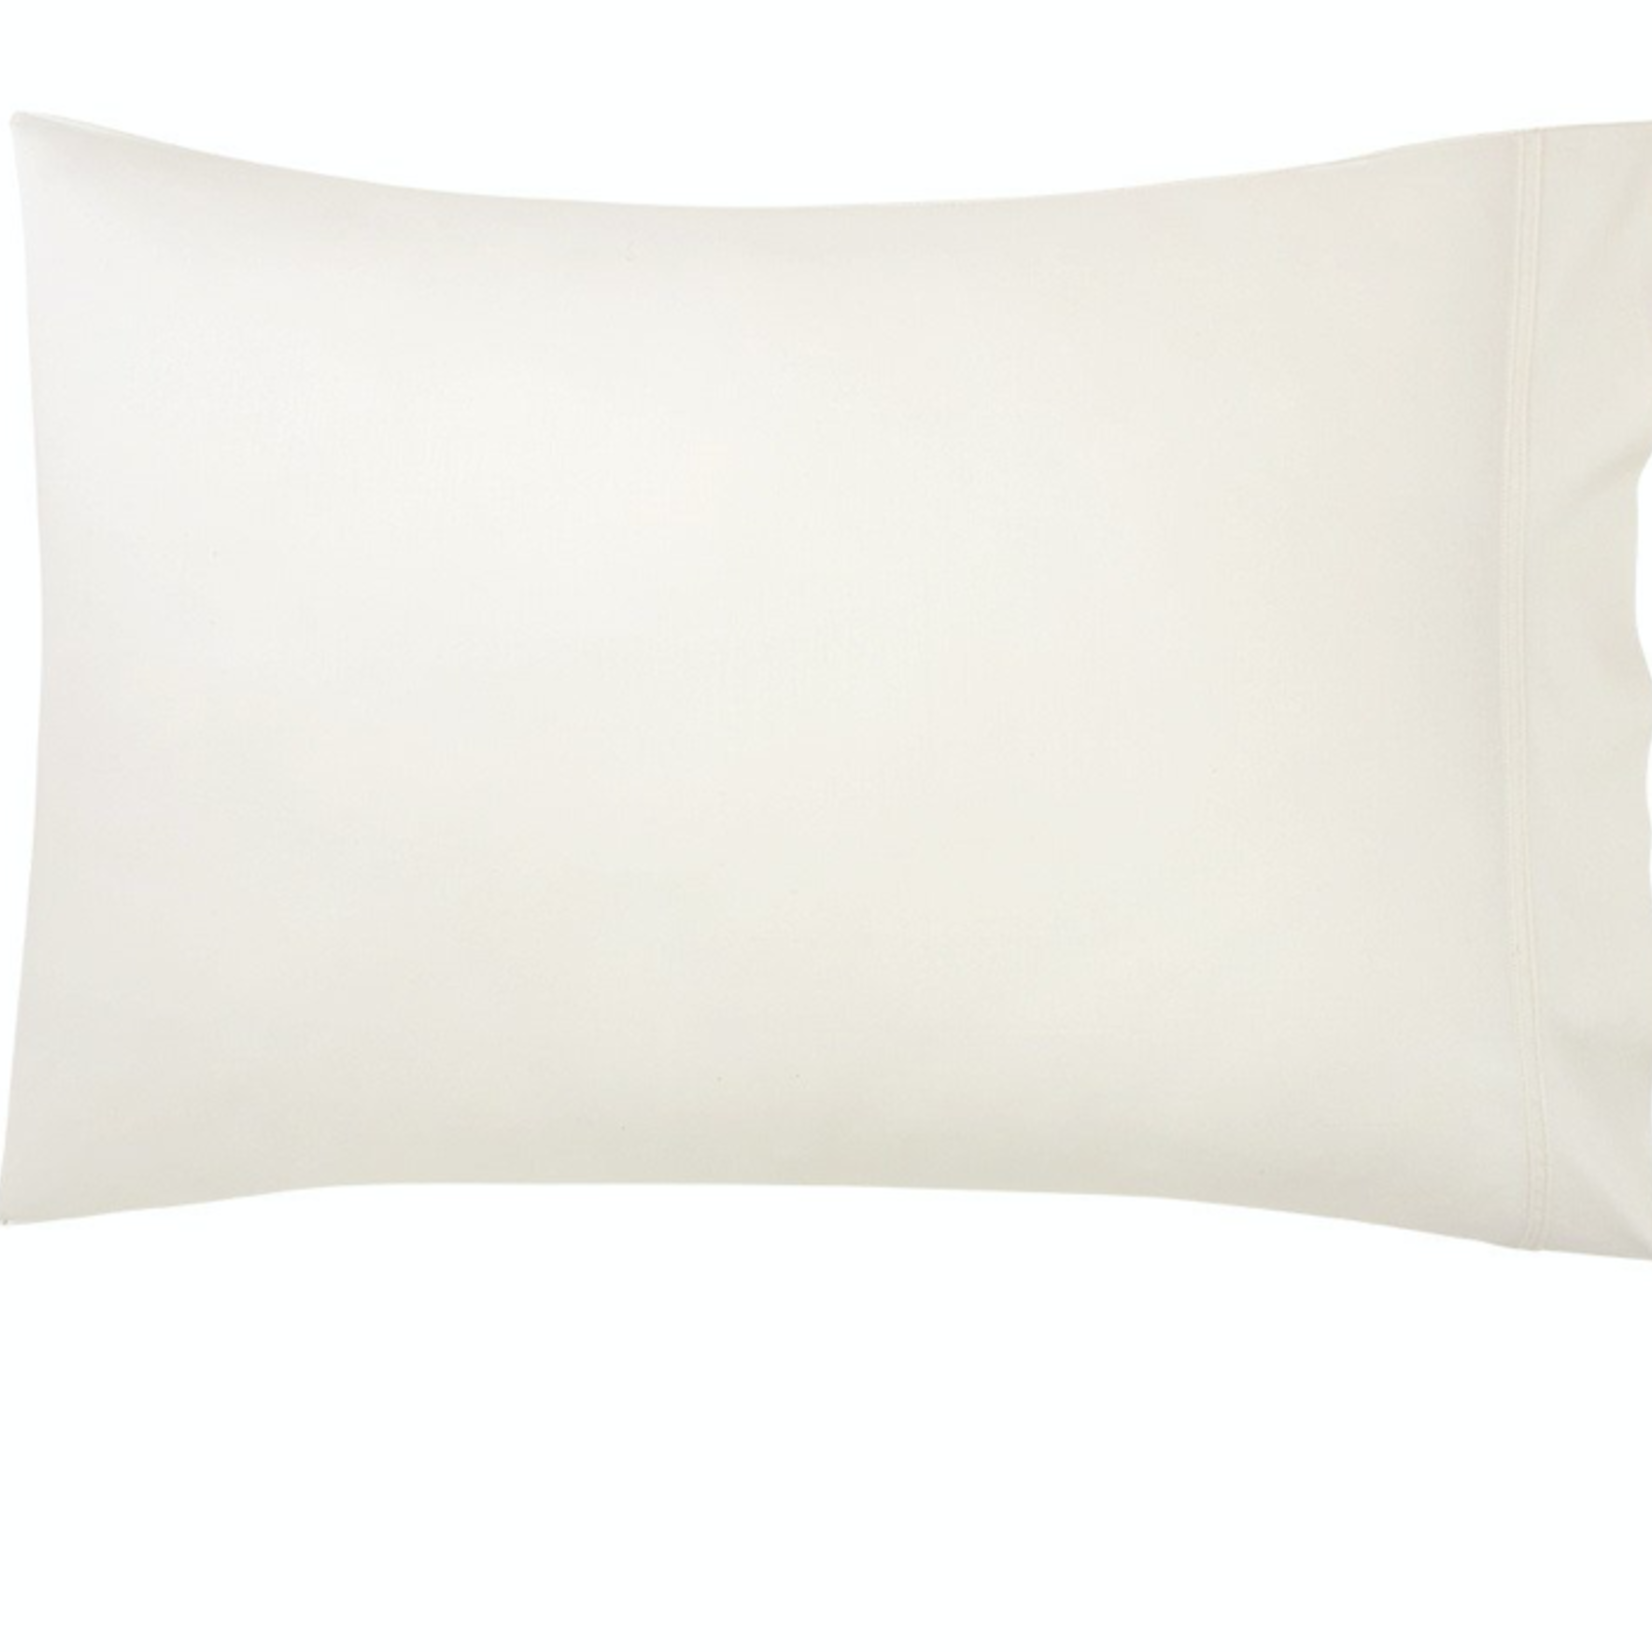 Triomphe (Double Saddle Stitch Cotton Sateen- 310 t/c) Pillowcase